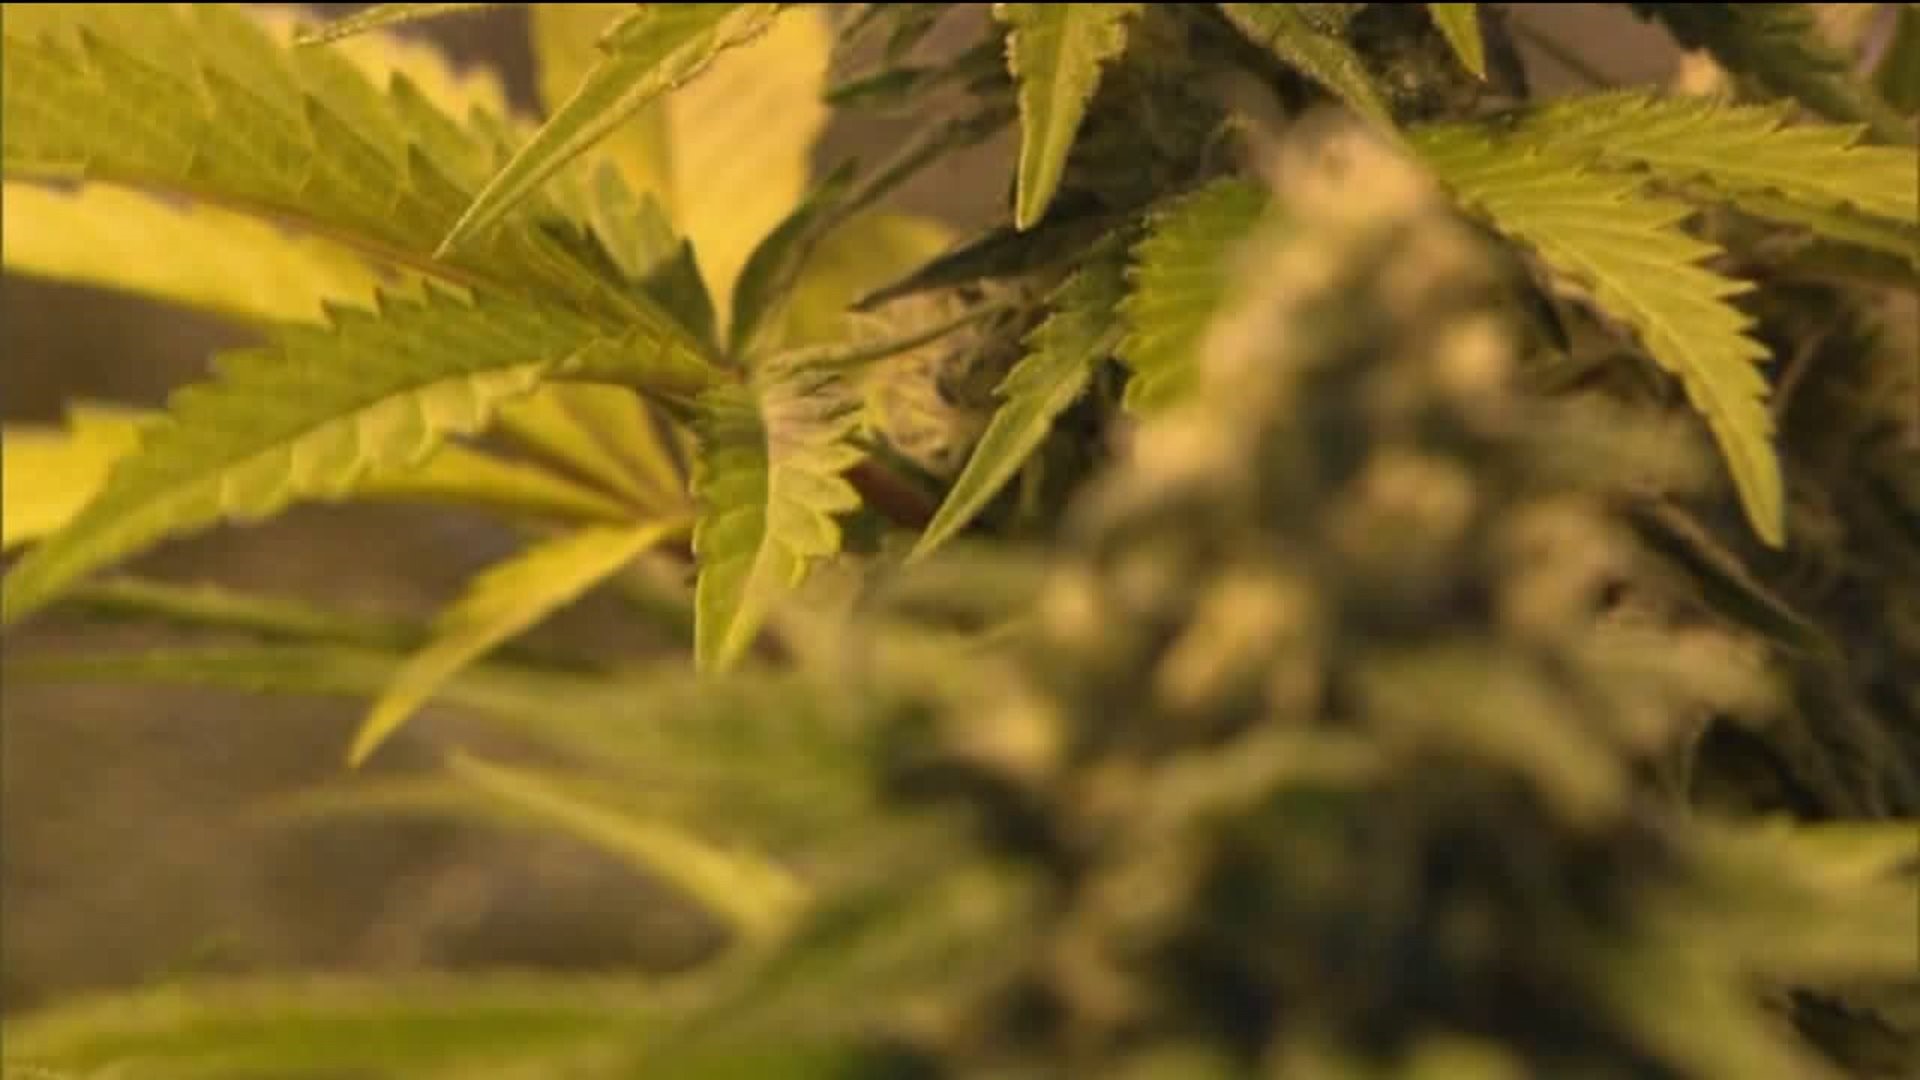 Grow it Yourself: Recreational Marijuana Proposal for PA